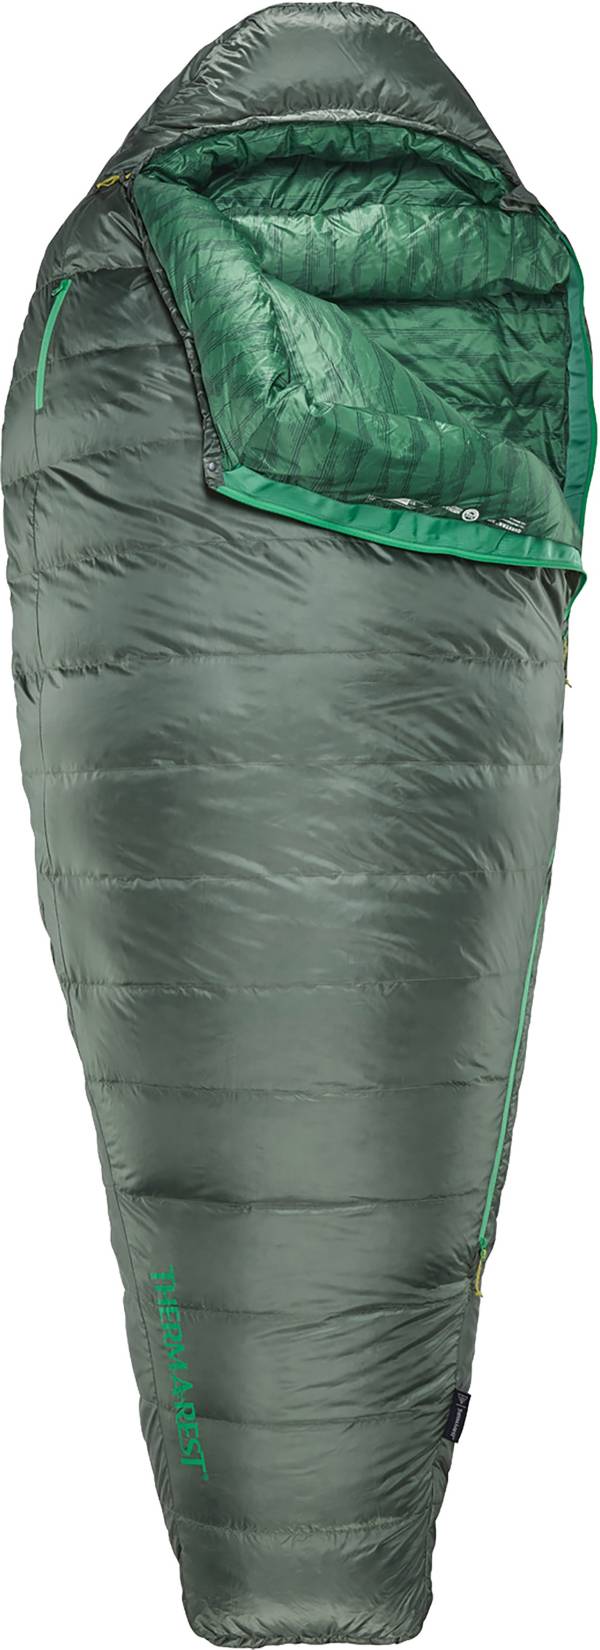 Questar 32F/0C Sleeping Bag product image